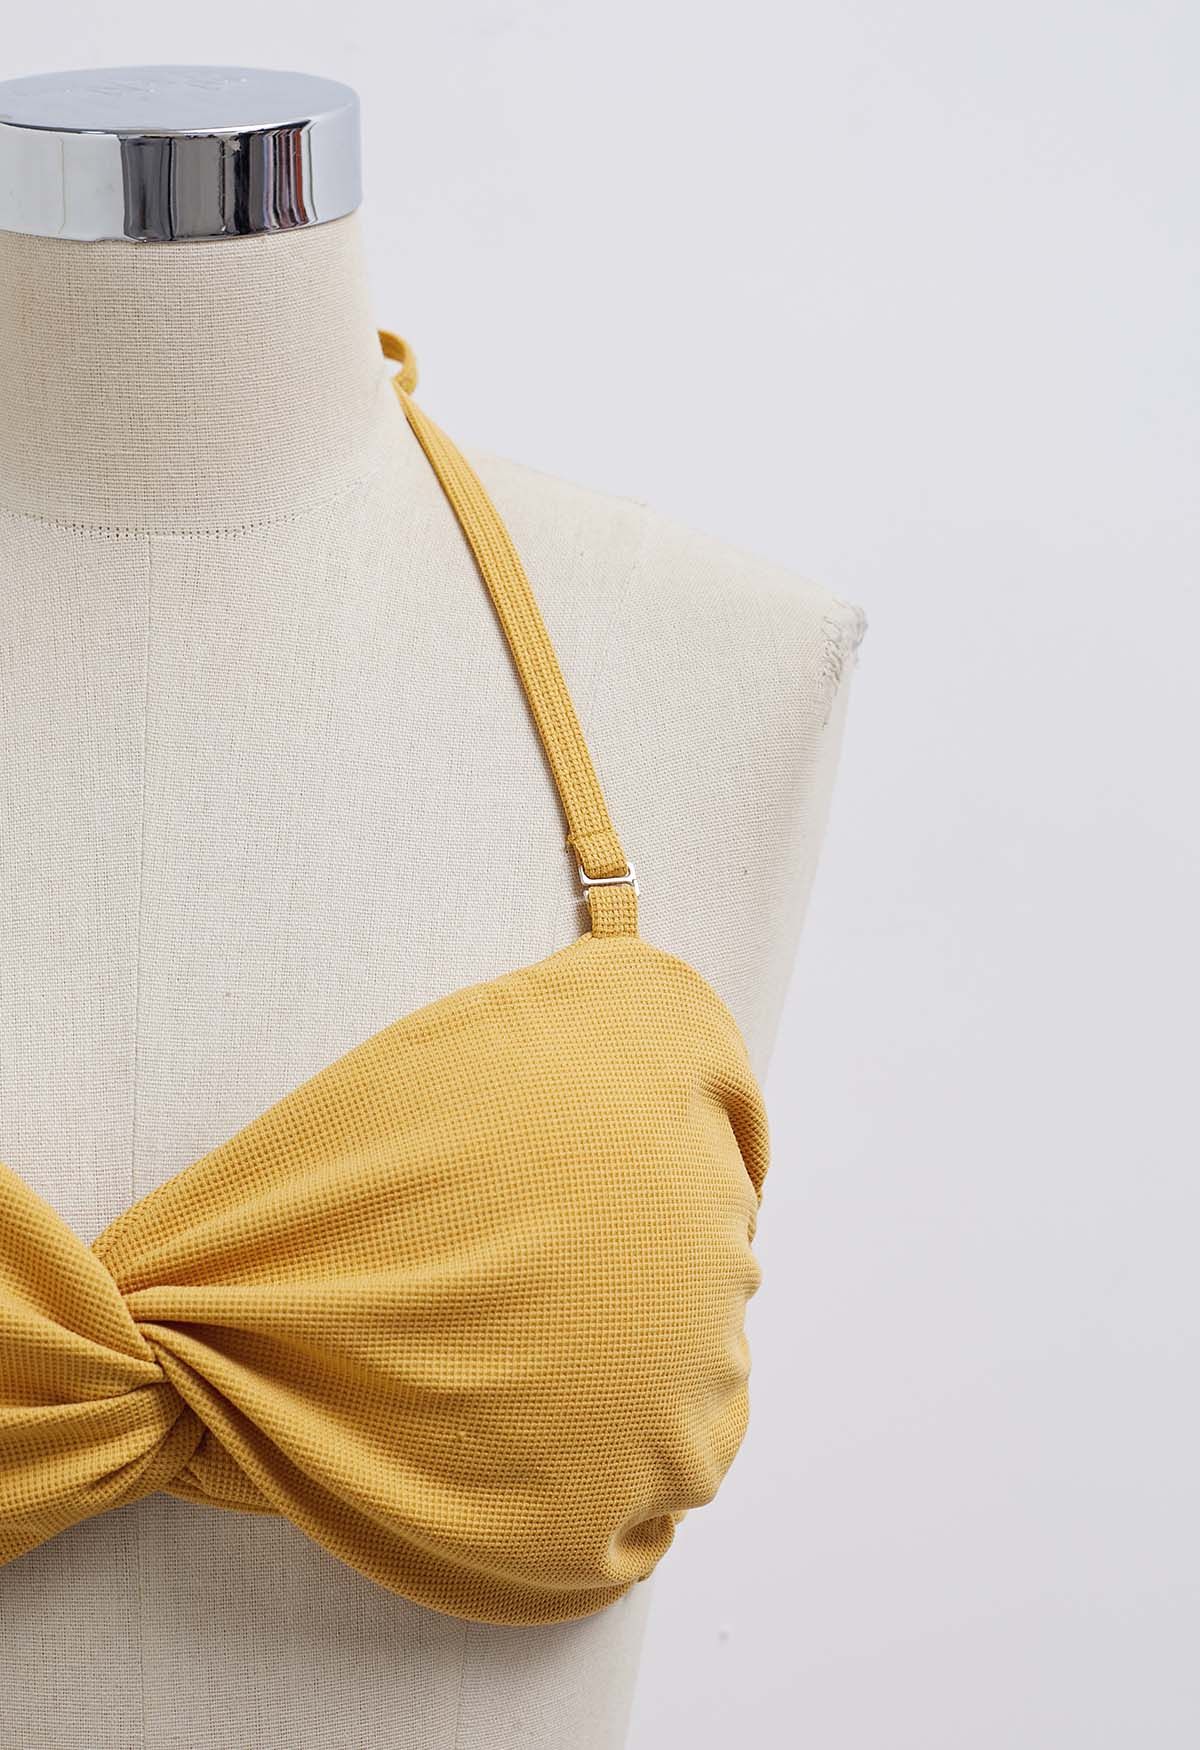 Twisted Detail Side Ruched Halter Bikini Set in Mustard